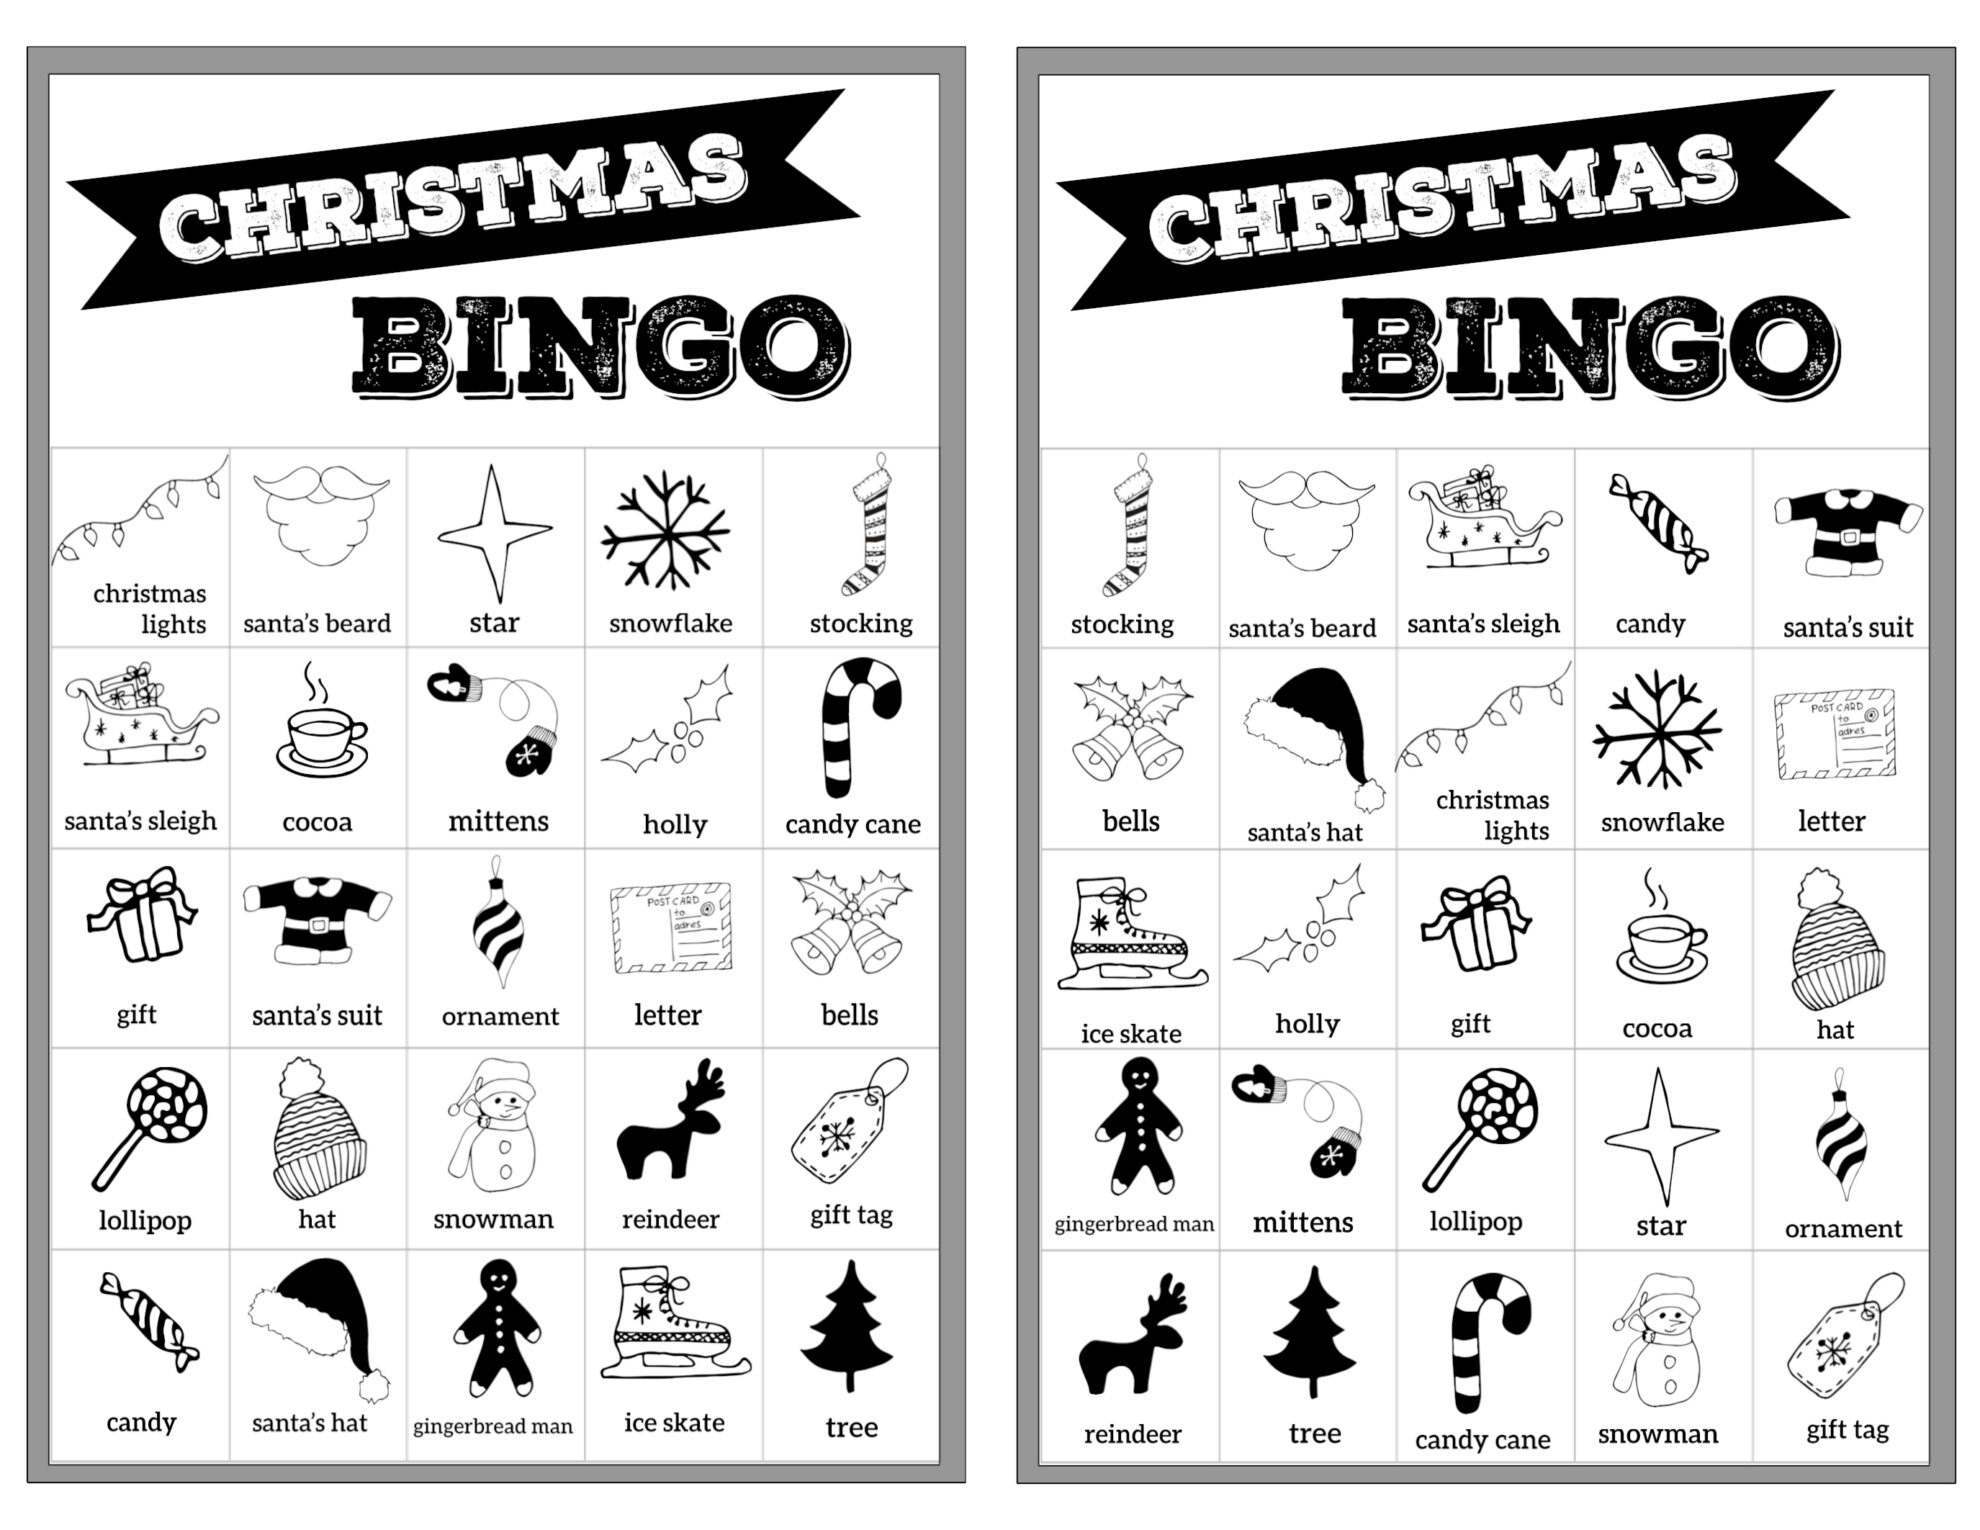 Free Christmas Bingo Printable Cards Paper Trail Design - Free Christmas Bingo Game Printable